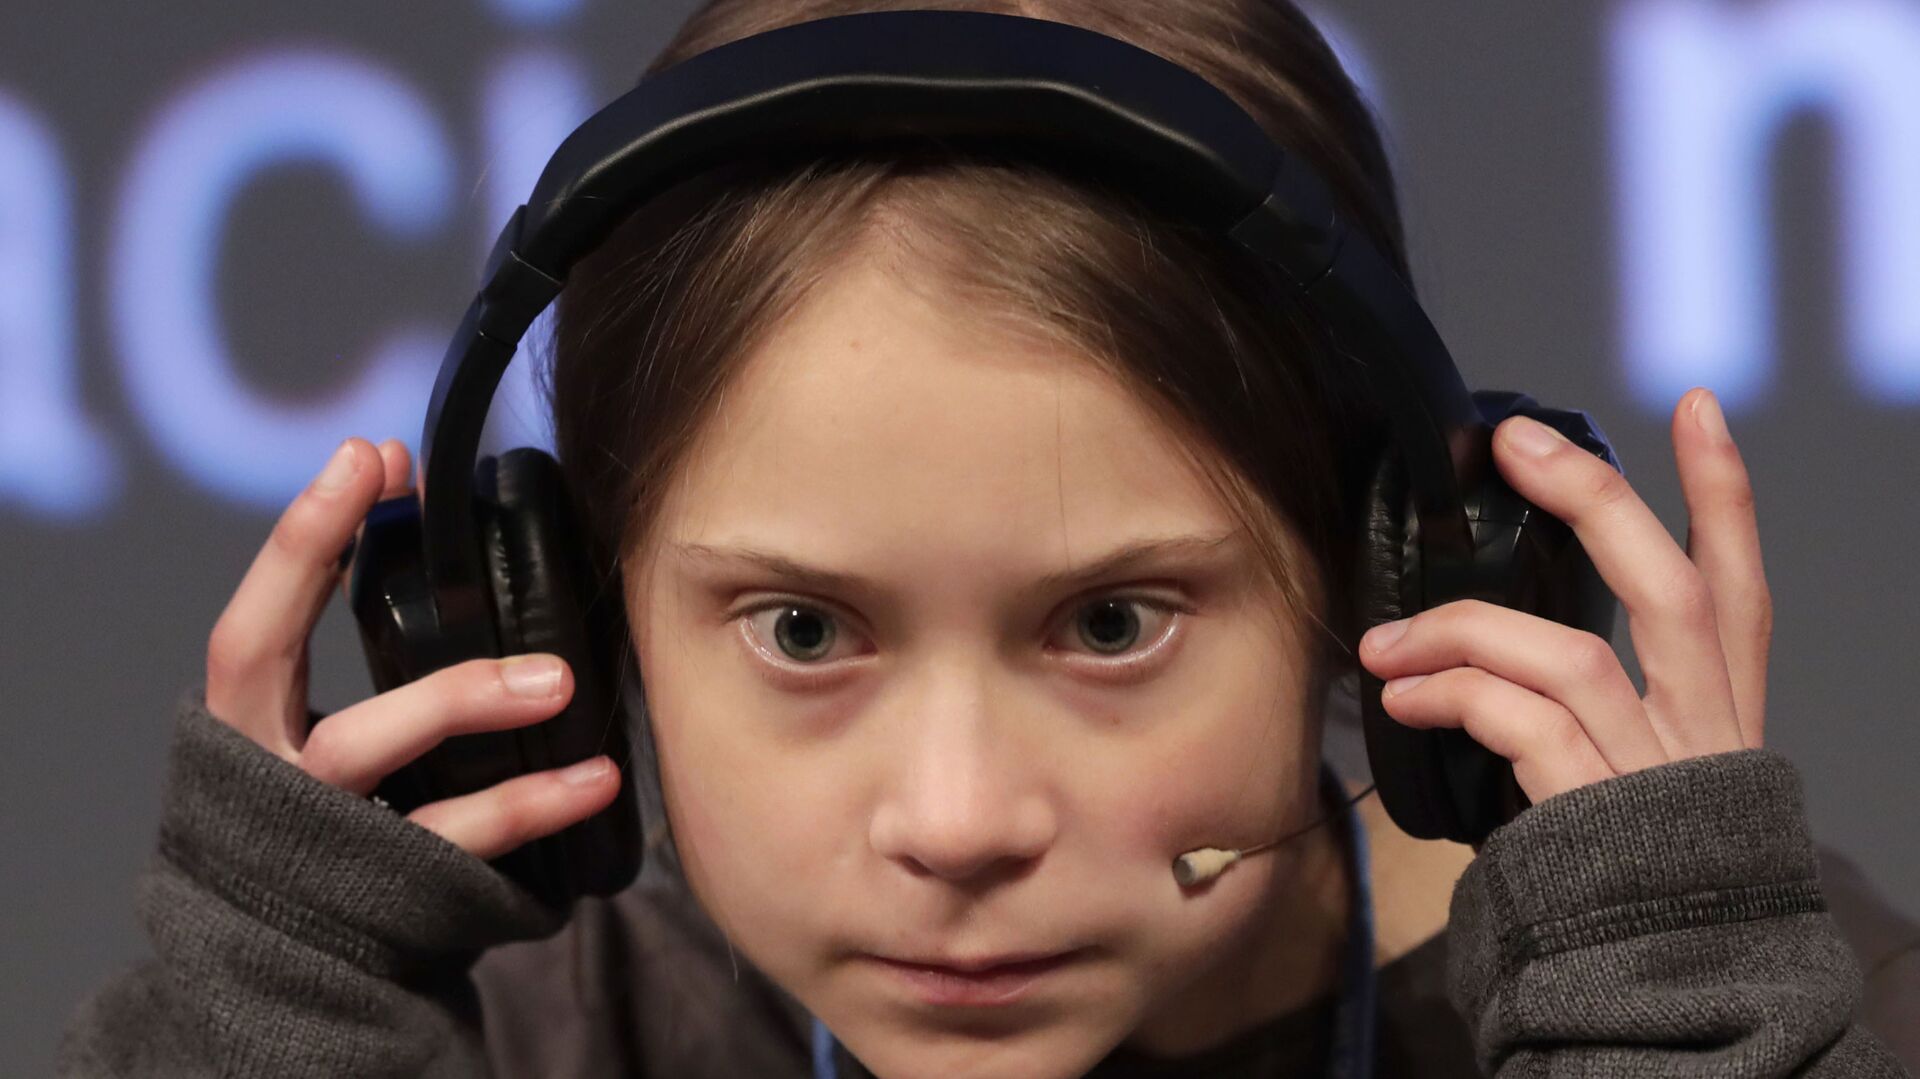 Climate activist Greta Thunberg adjusts the headphones during a press conference in Madrid, Friday Dec. 6, 2019 - Sputnik International, 1920, 03.11.2021